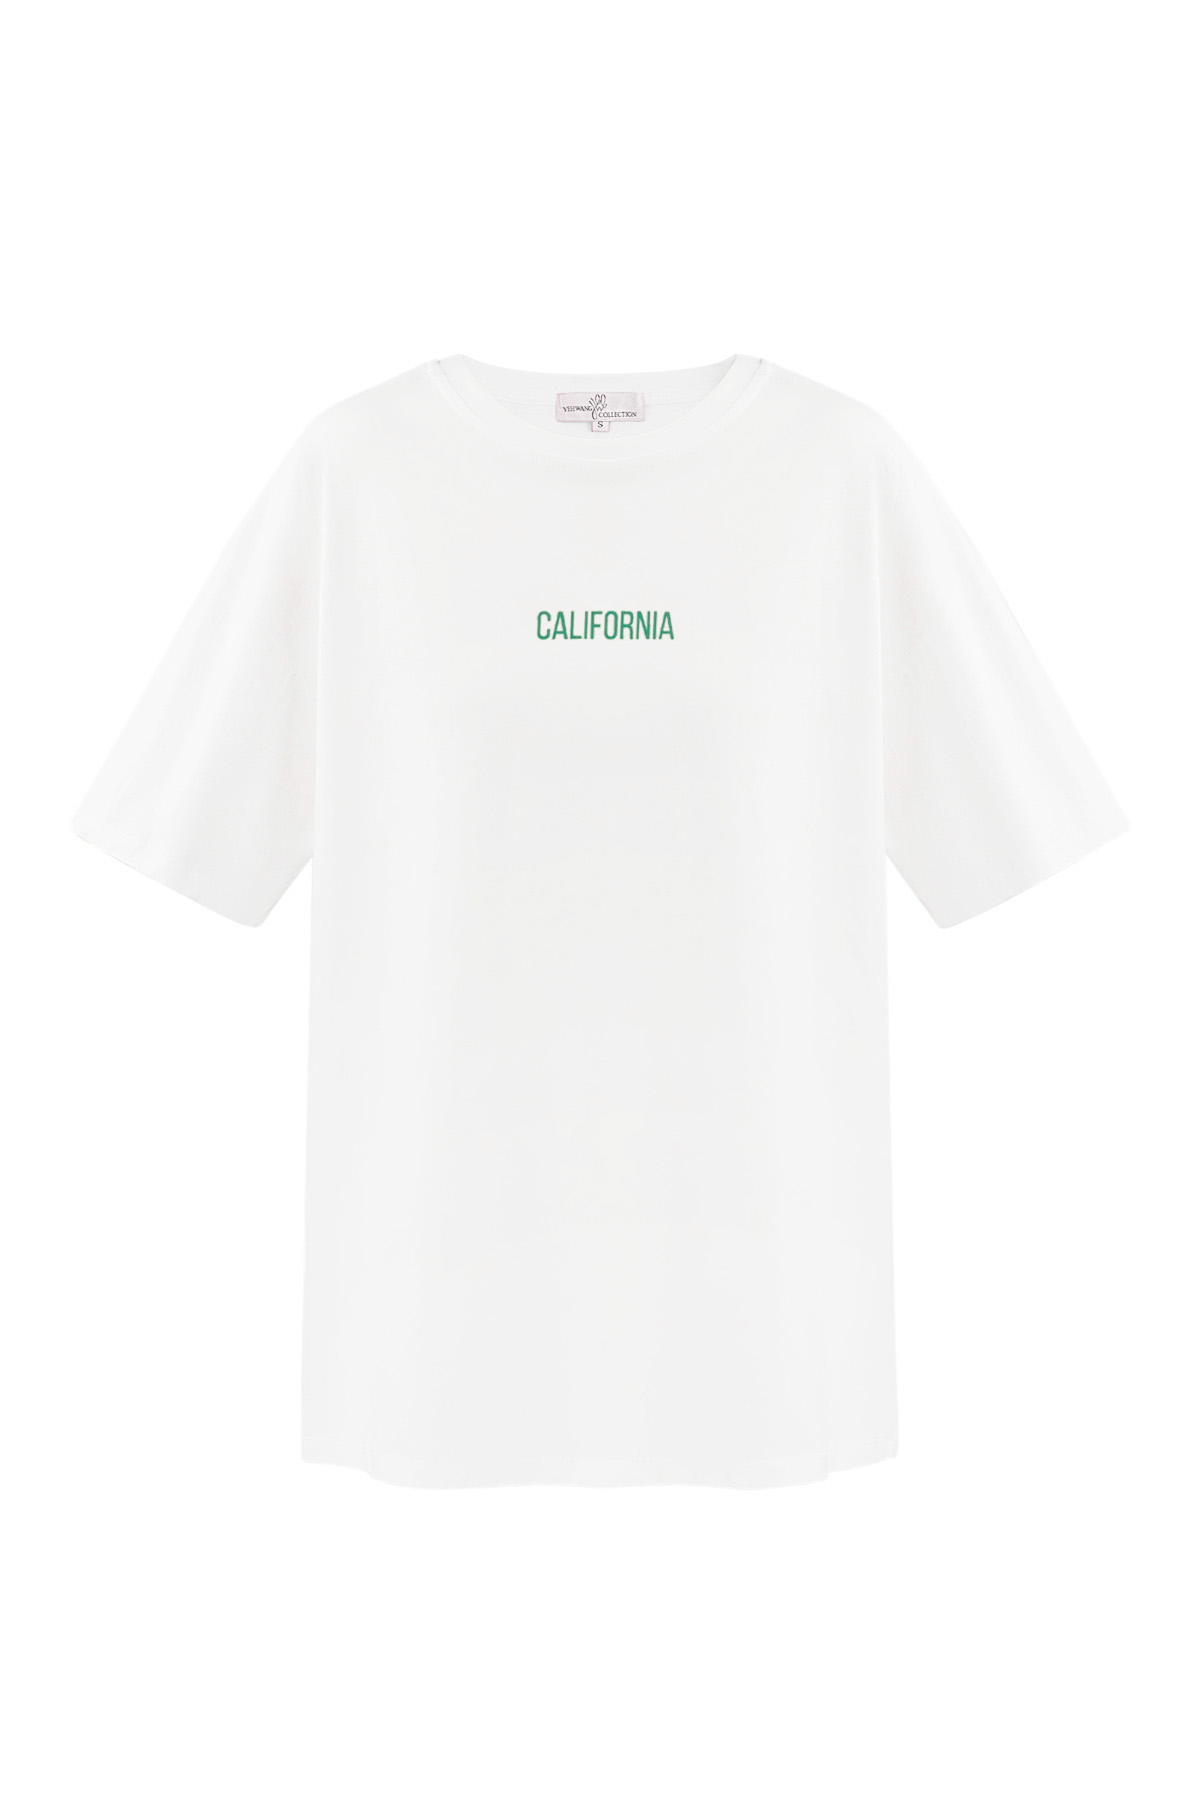 California T-shirt - white